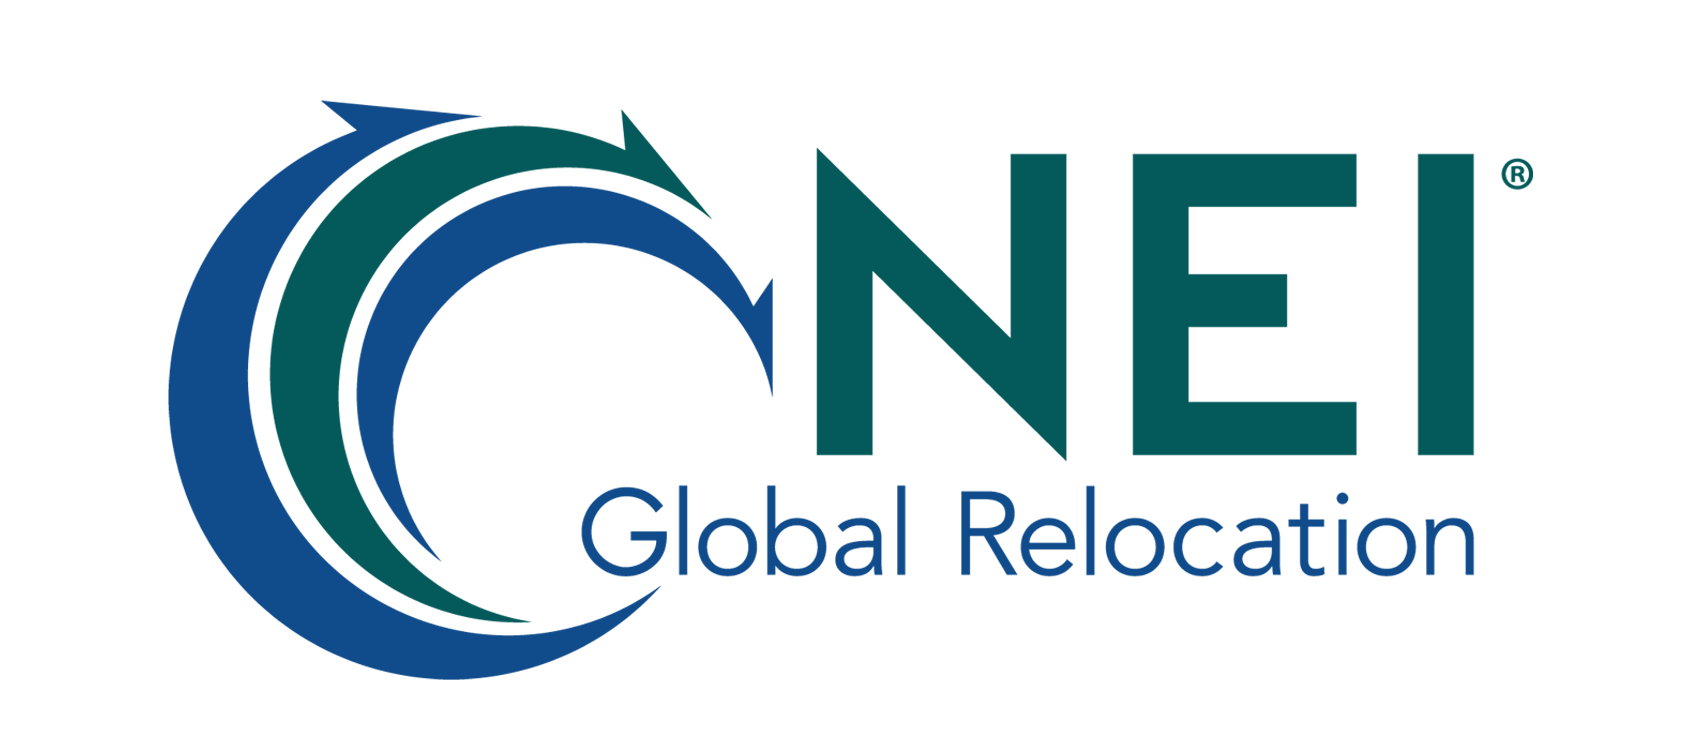 NEI Global Relocation logo